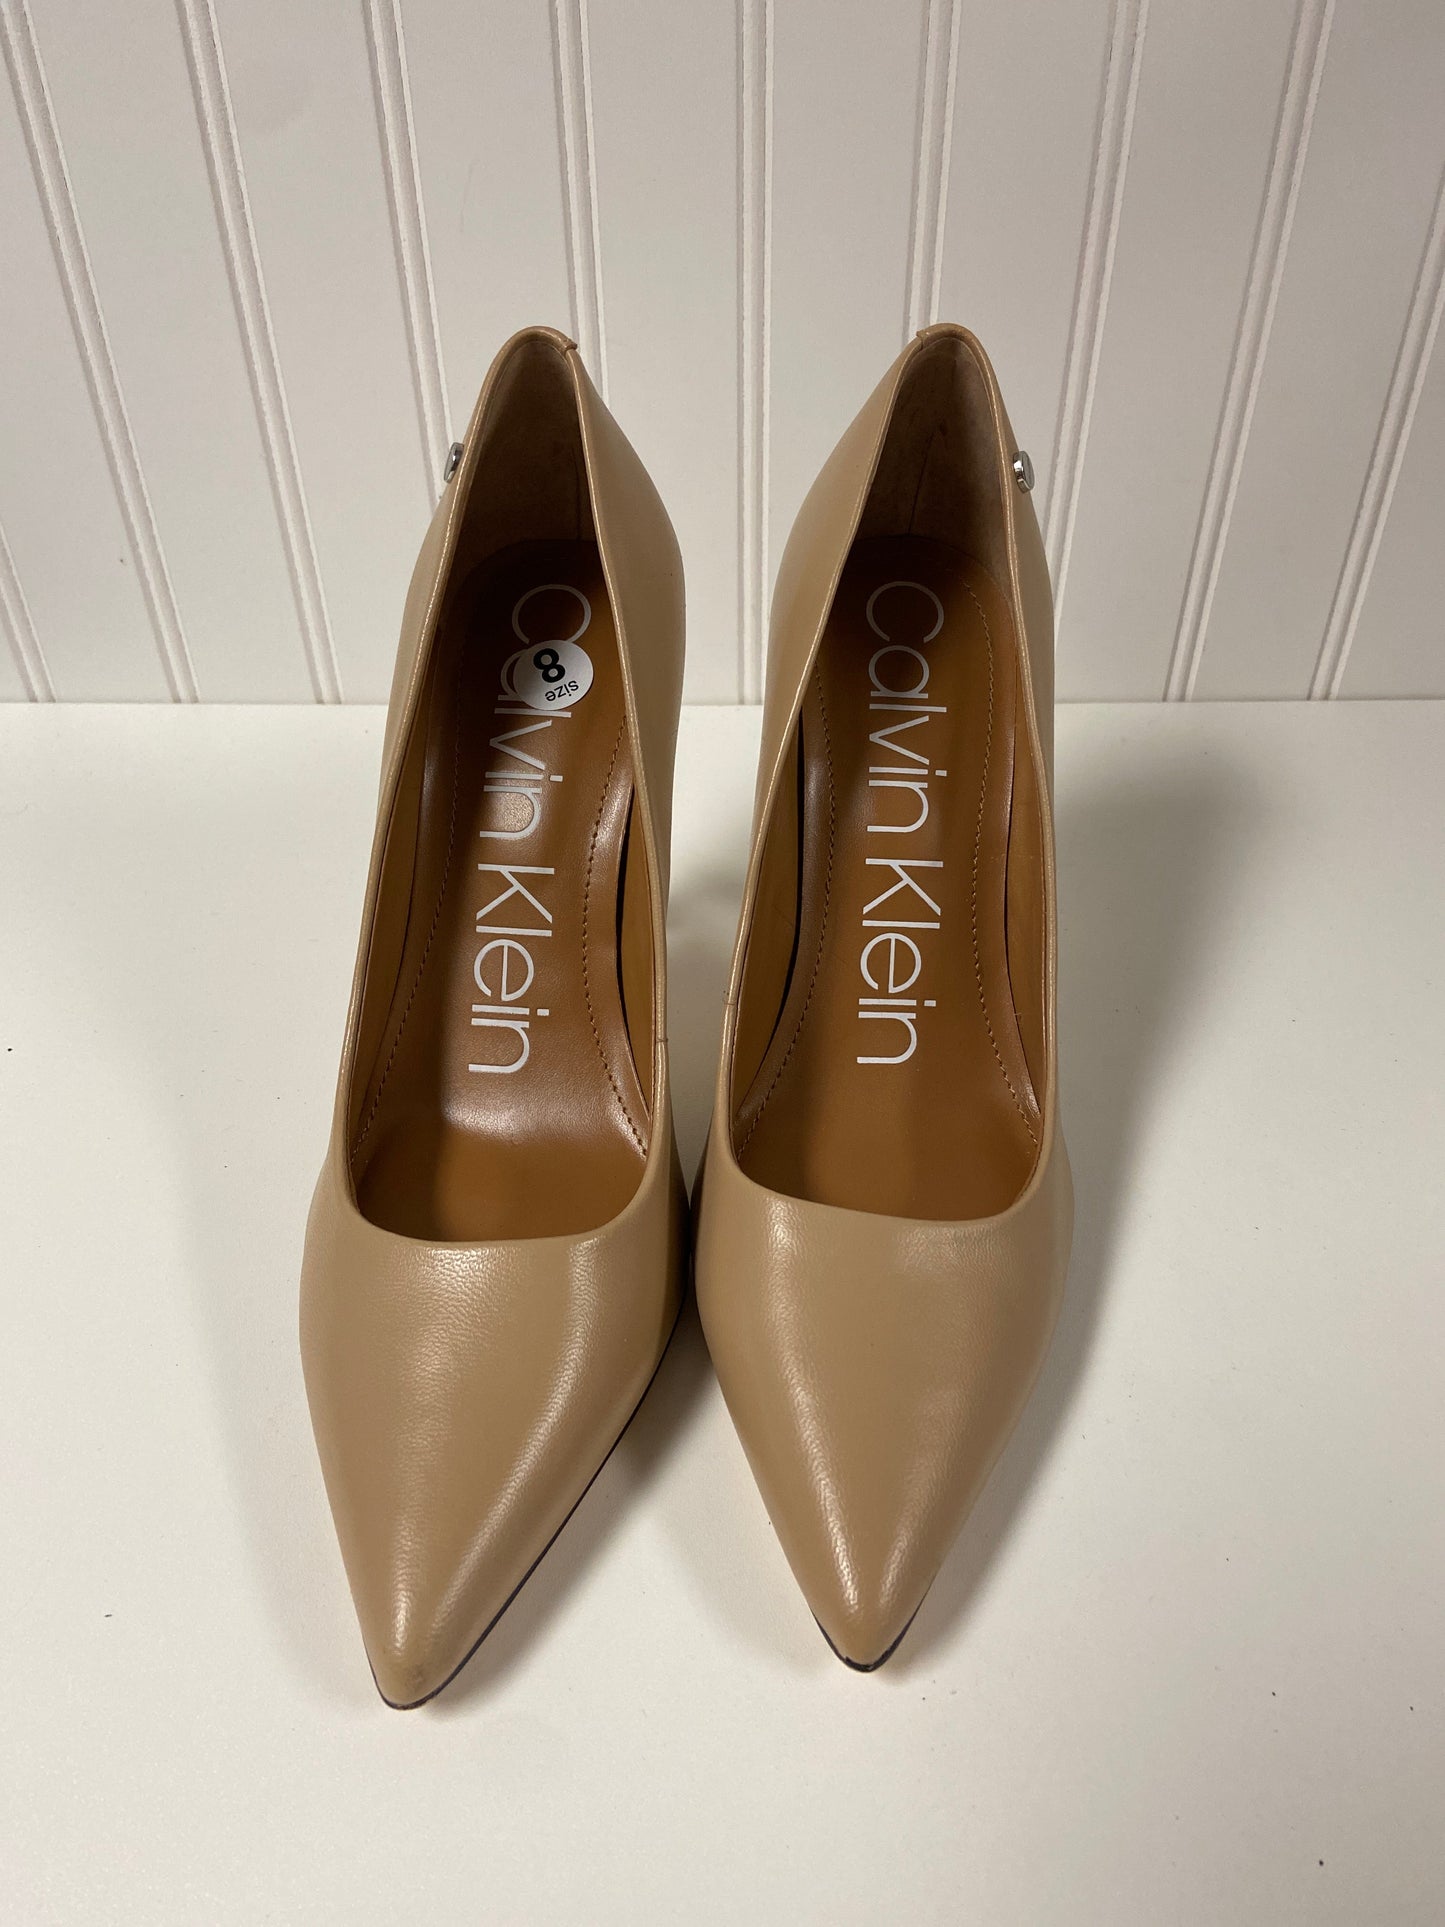 Shoes Heels Stiletto By Calvin Klein  Size: 8